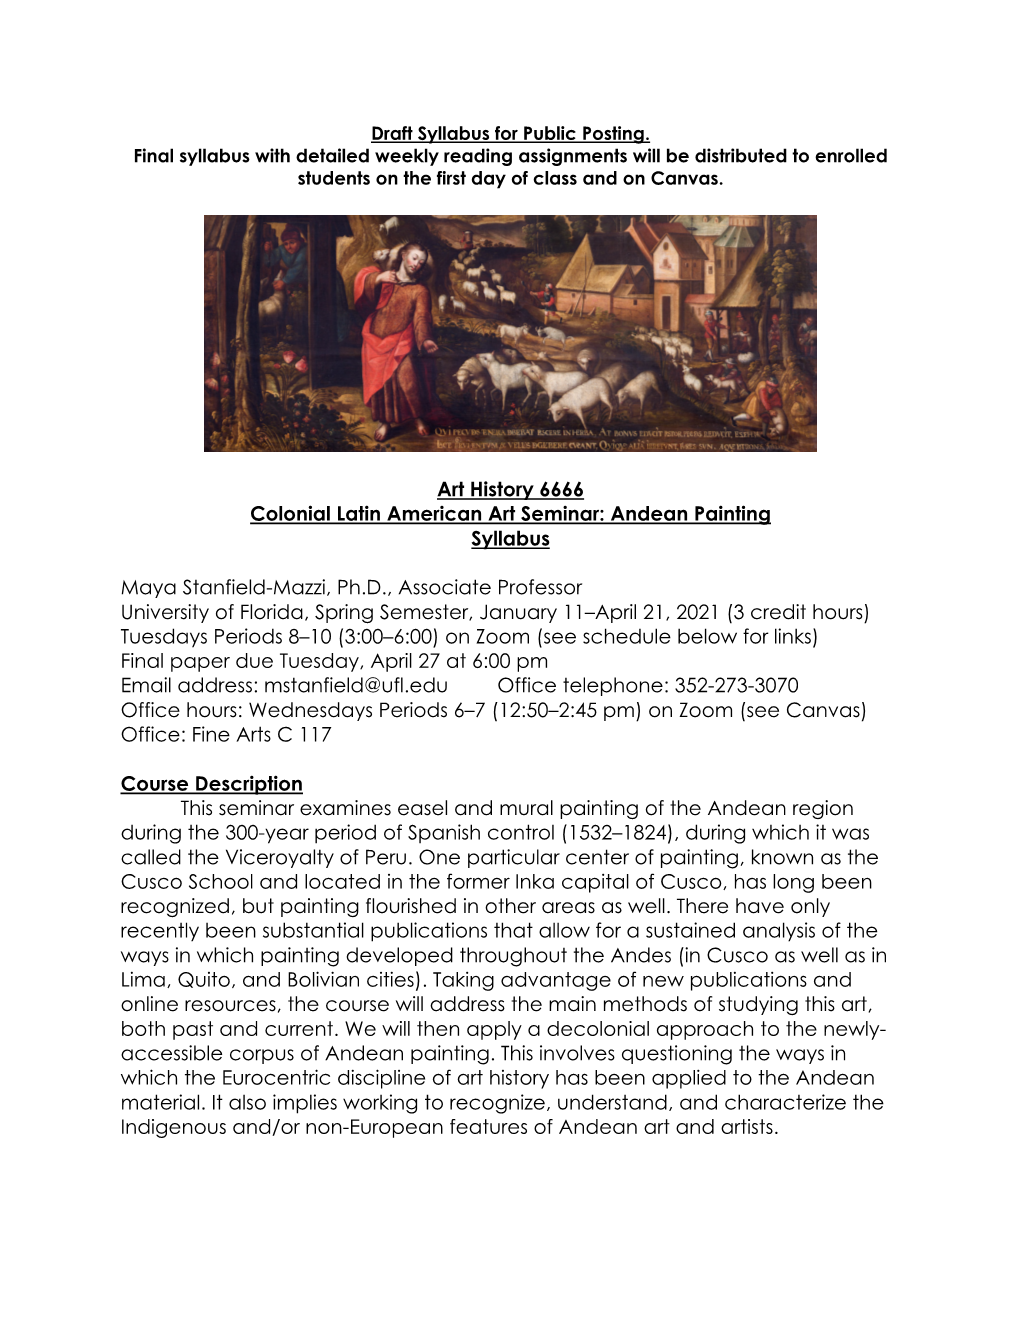 Art History 6666 Colonial Latin American Art Seminar: Andean Painting Syllabus